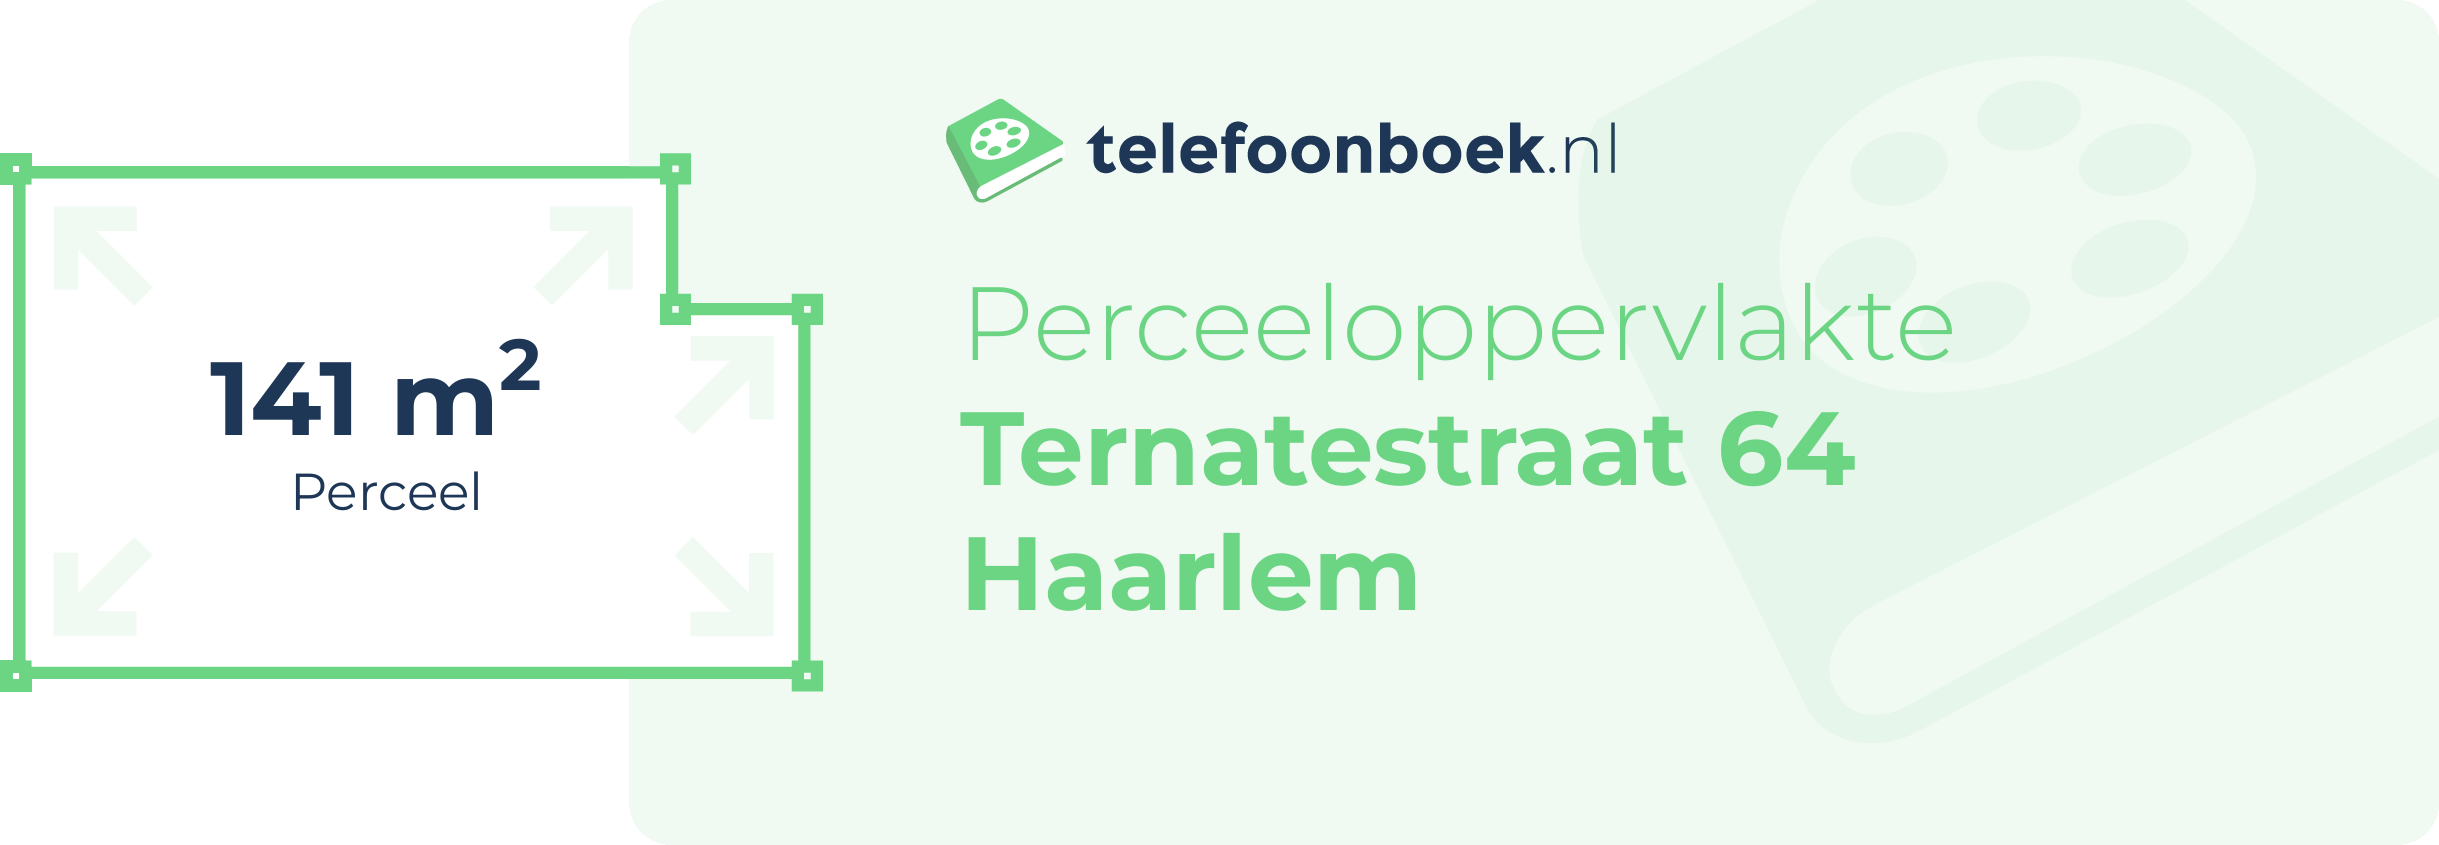 Perceeloppervlakte Ternatestraat 64 Haarlem